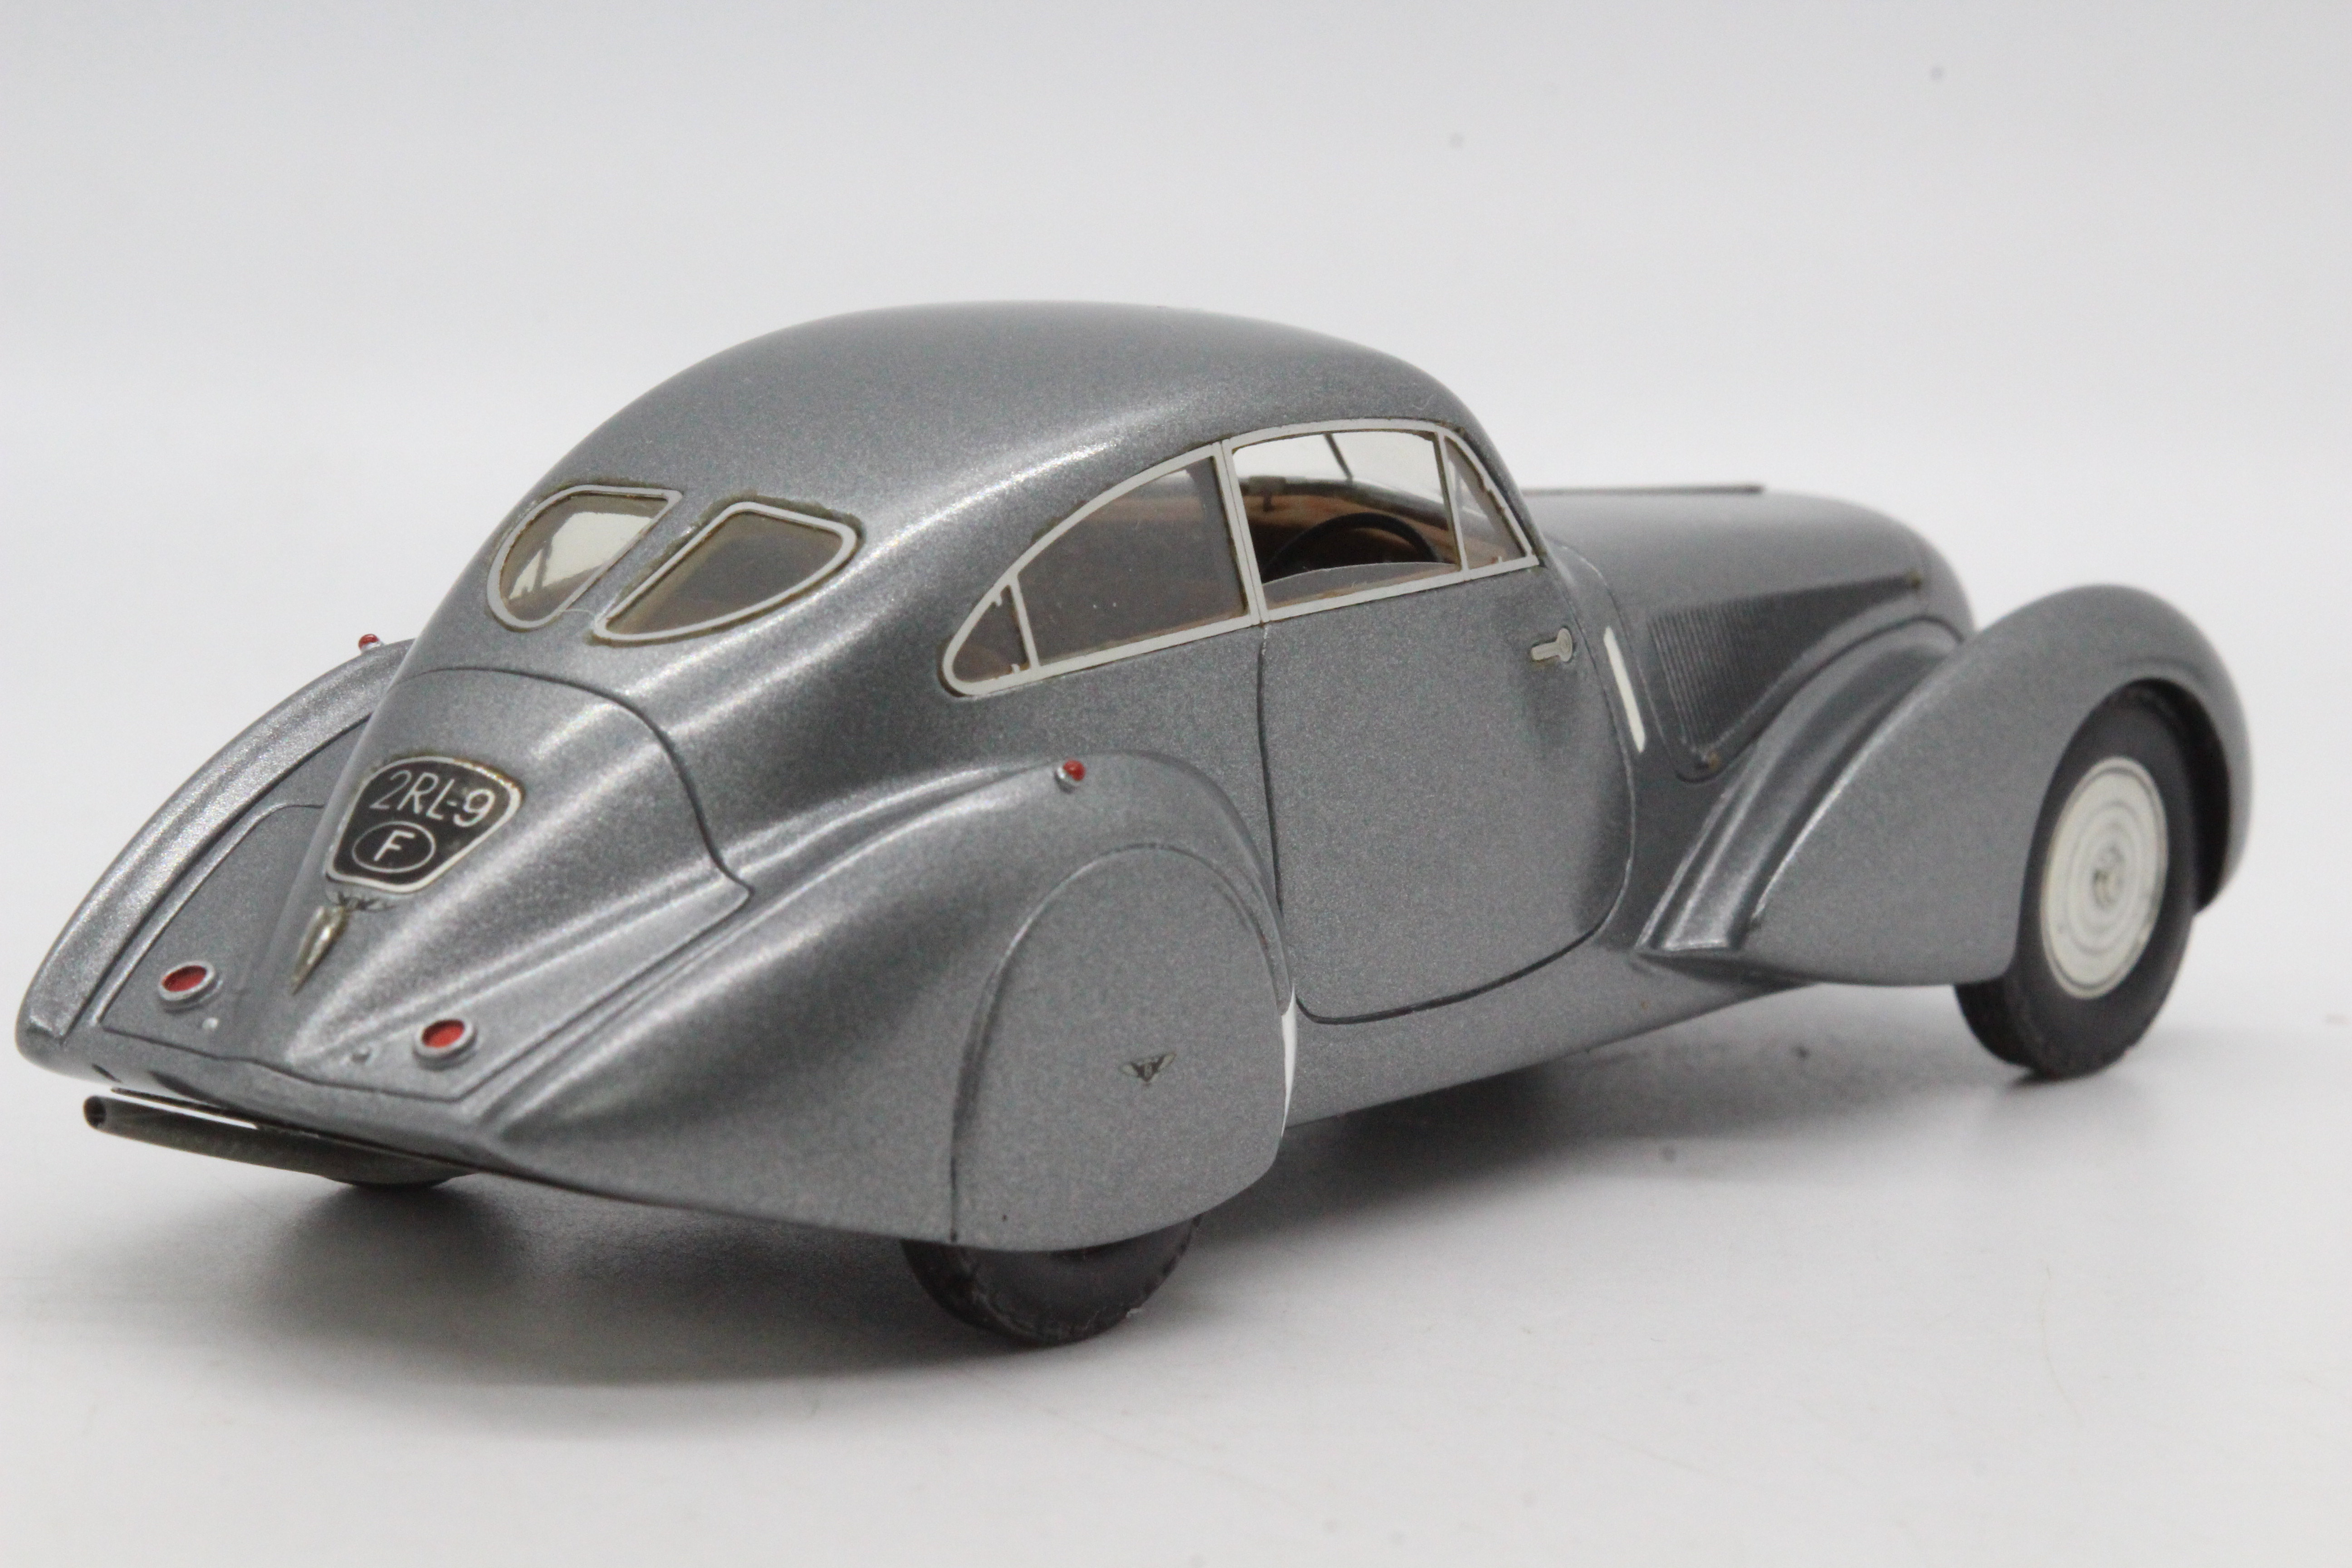 MPH Models, Tim Dyke - A boxed MPH Models #956 Bentley 'Embiricos' 1938 Road Car. - Image 6 of 9